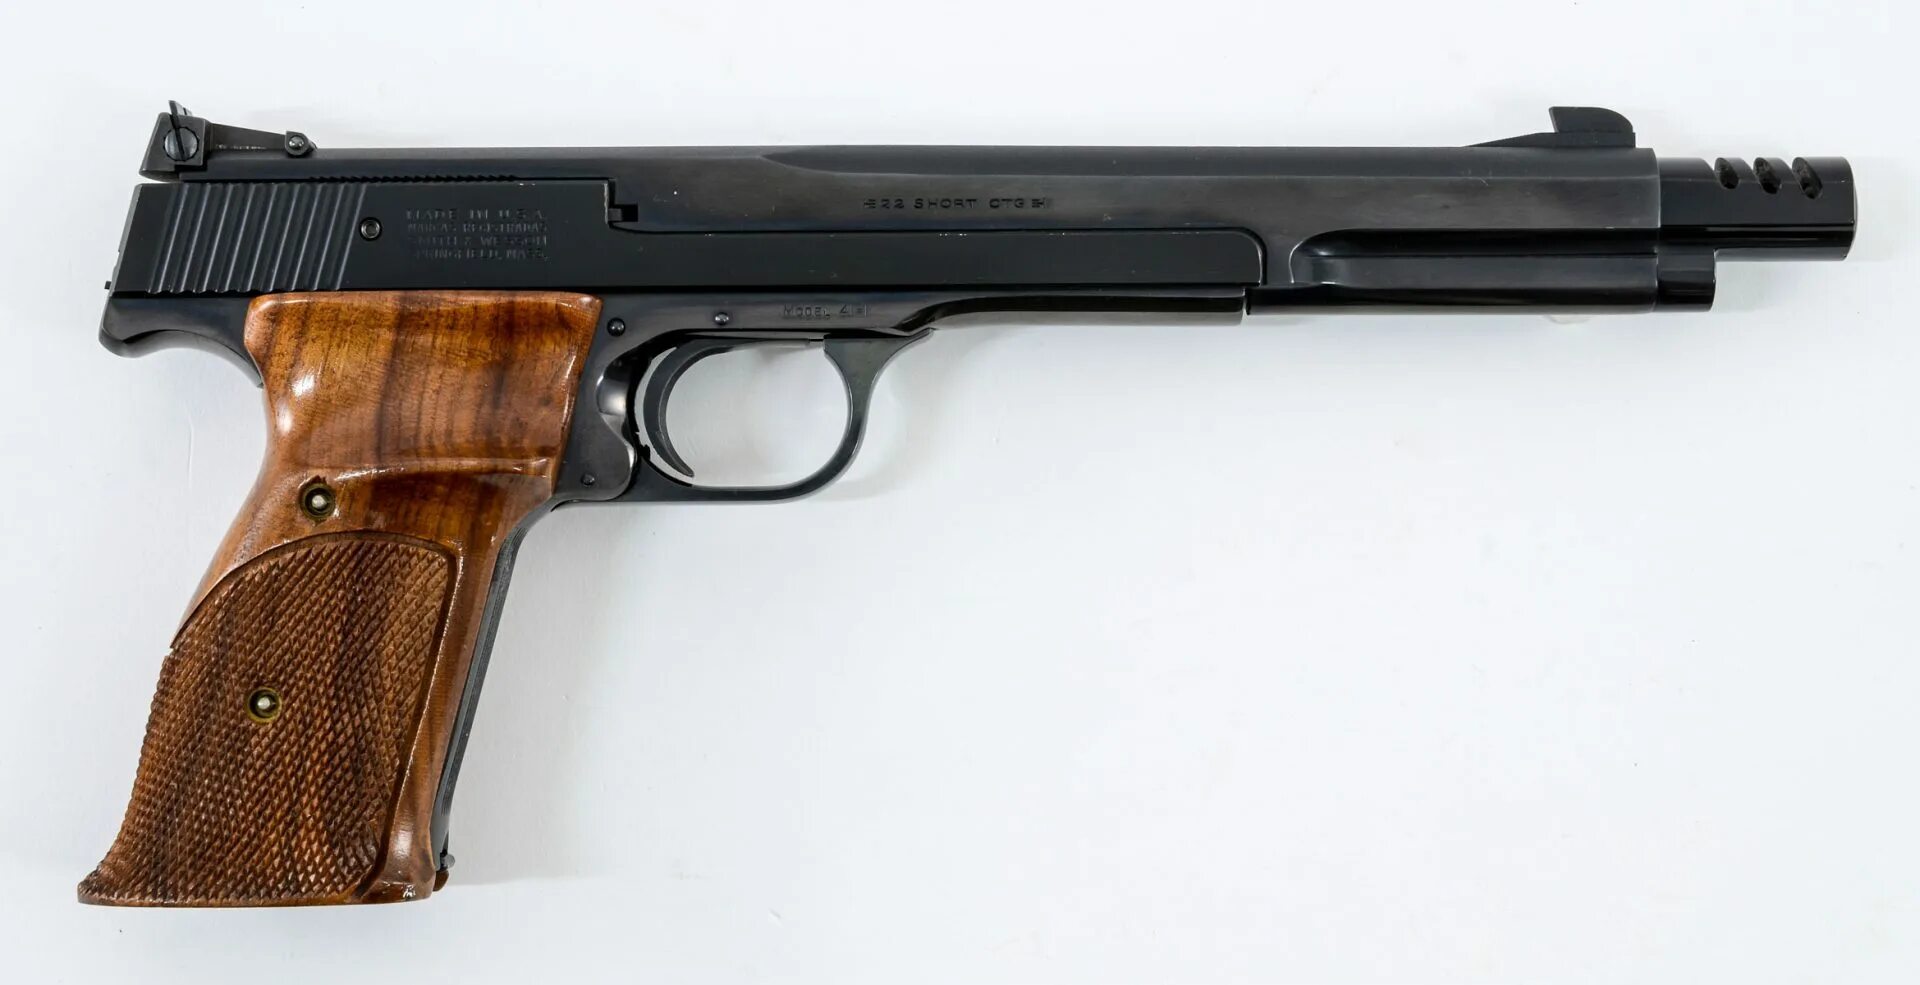 Smith & Wesson model 41. Smith Wesson model 41 22. Смит Вессон мод 41. Оружие под 22 шорт. 41 short